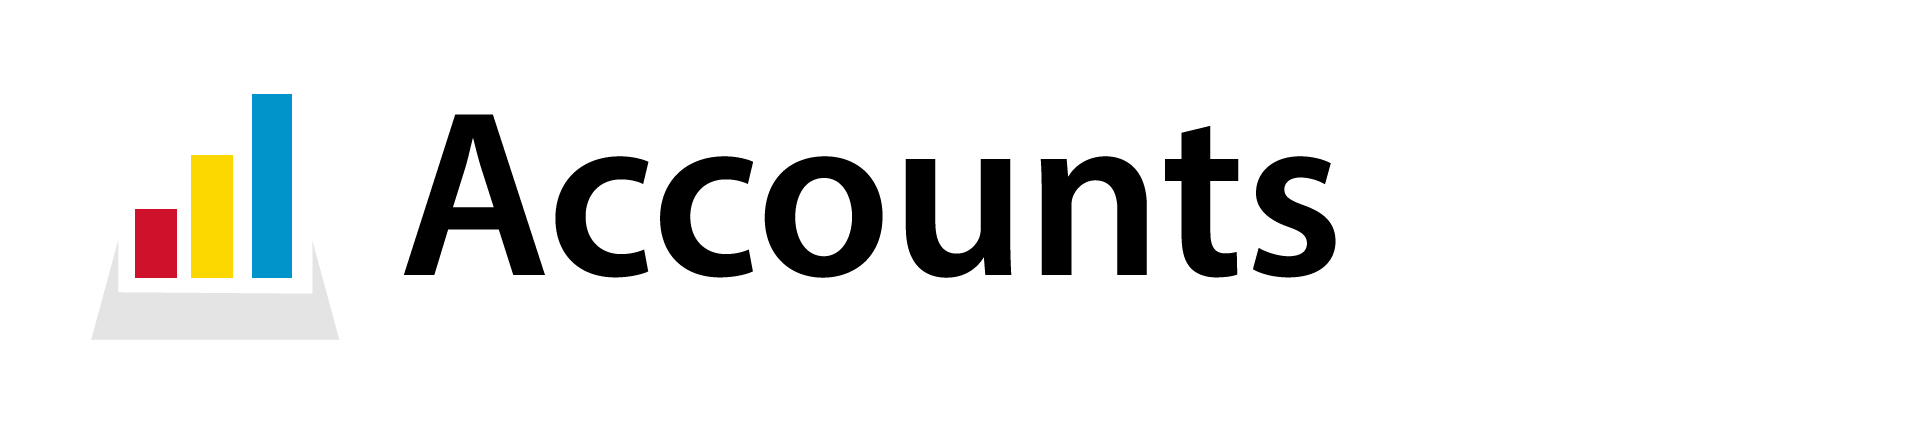 Accounts Logo - Accounts Logos